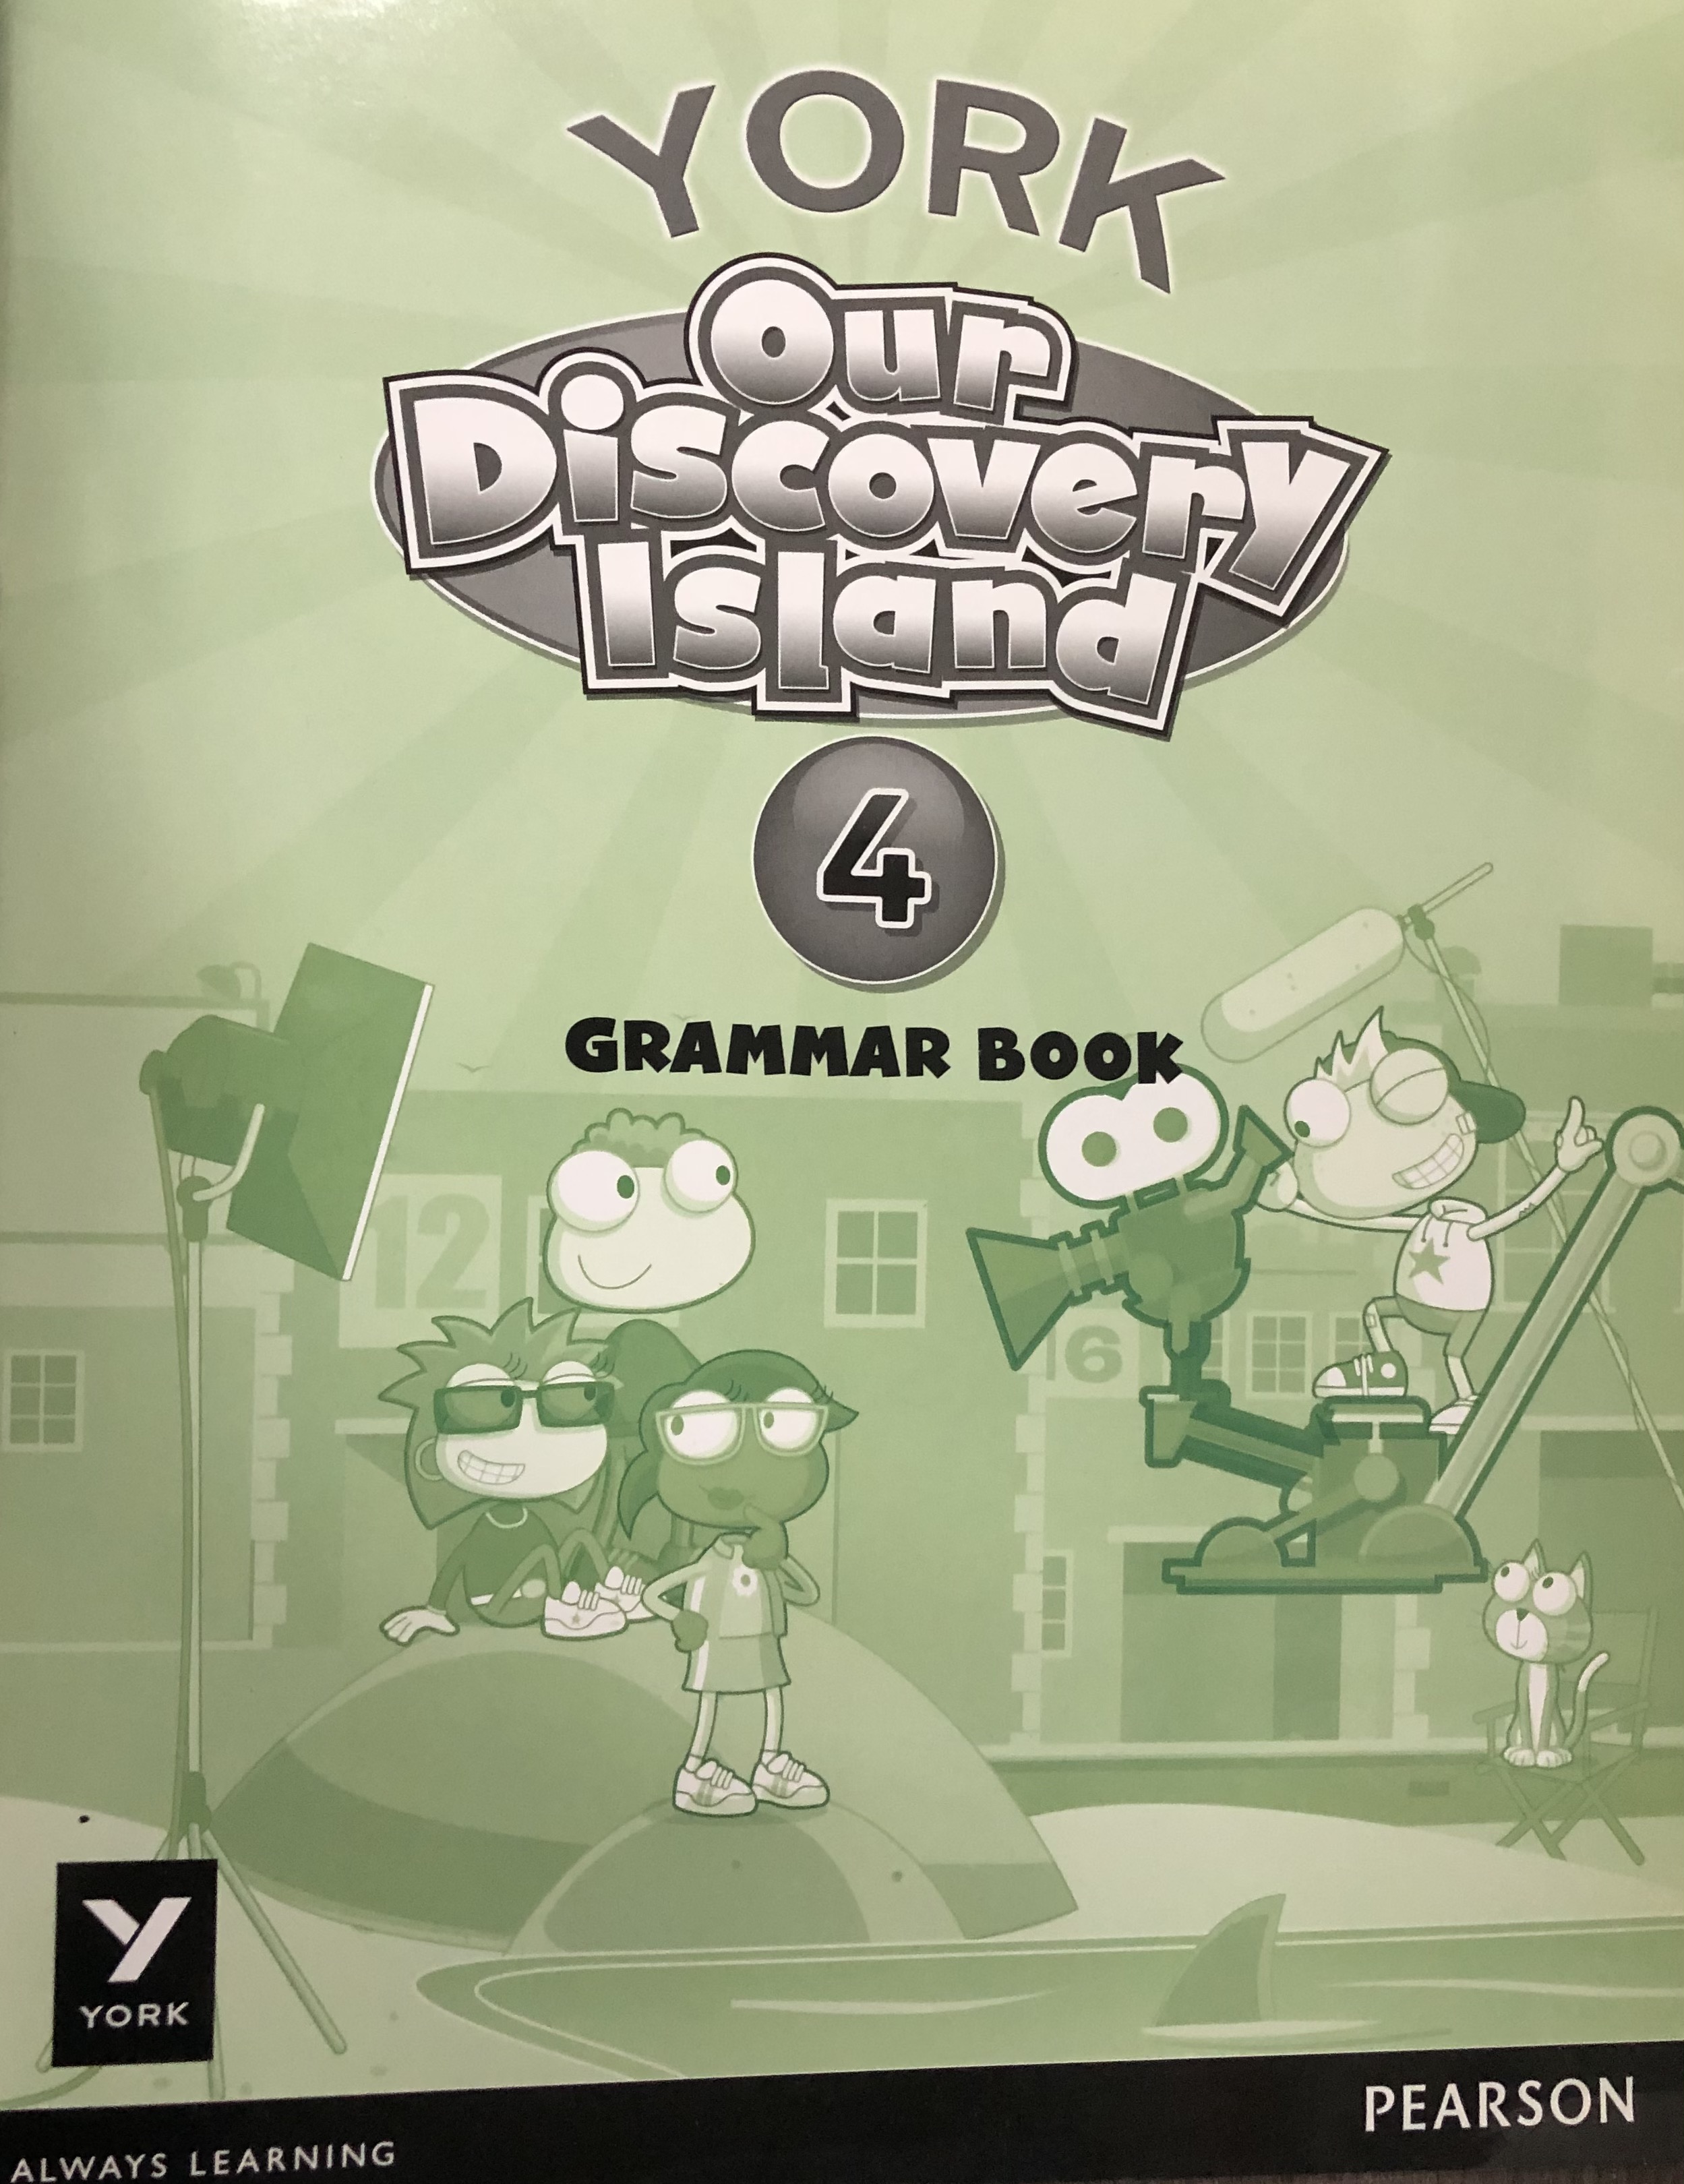 YORK OUR DISCOVERY ISLAND 5 GRAMMAR BOOK - Pearson